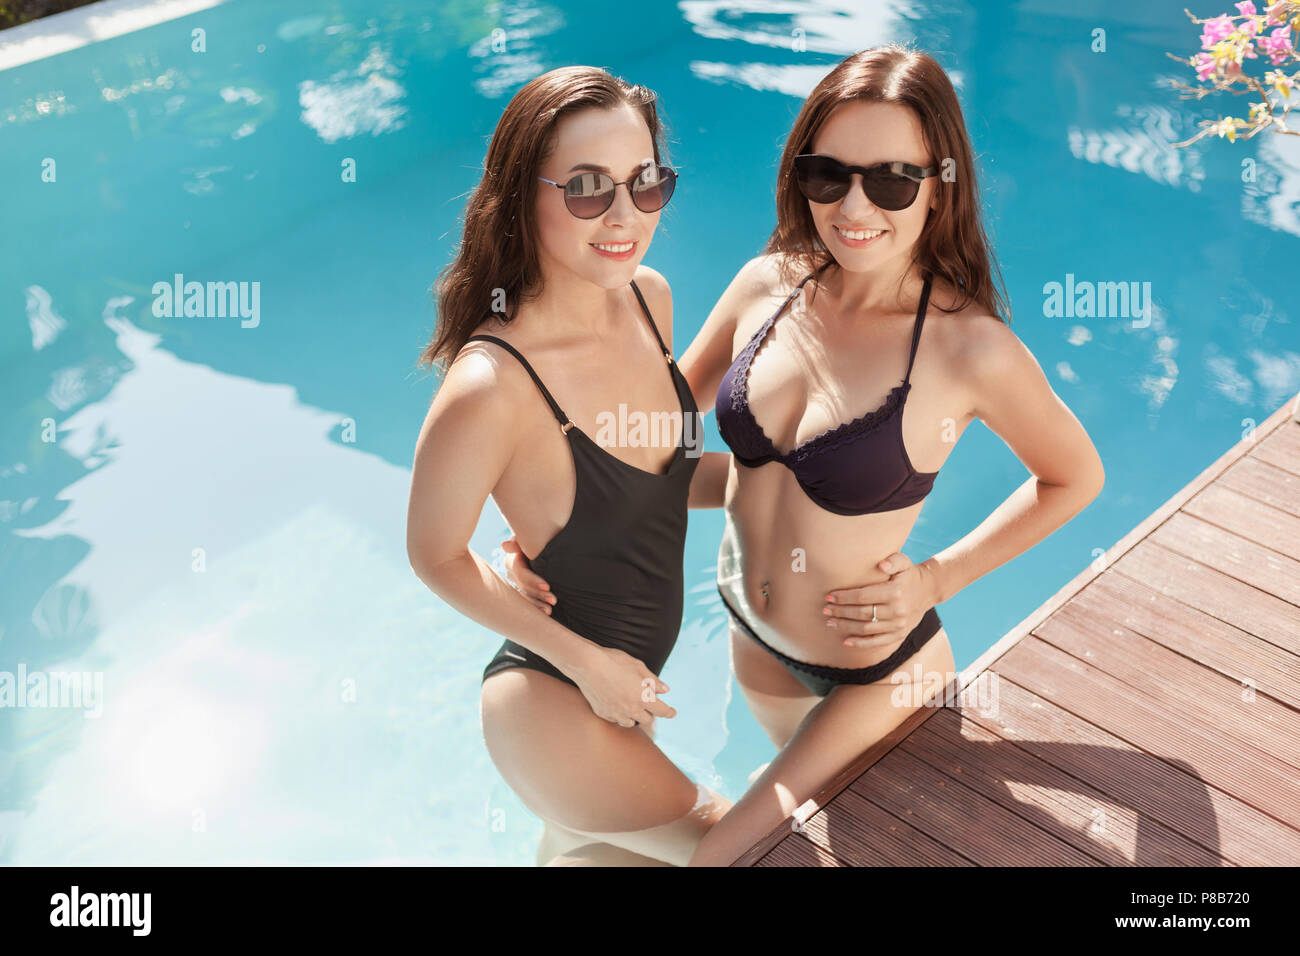 Attraktive junge Frauen in Bikini und Badehose in Pool Stockfotografie -  Alamy